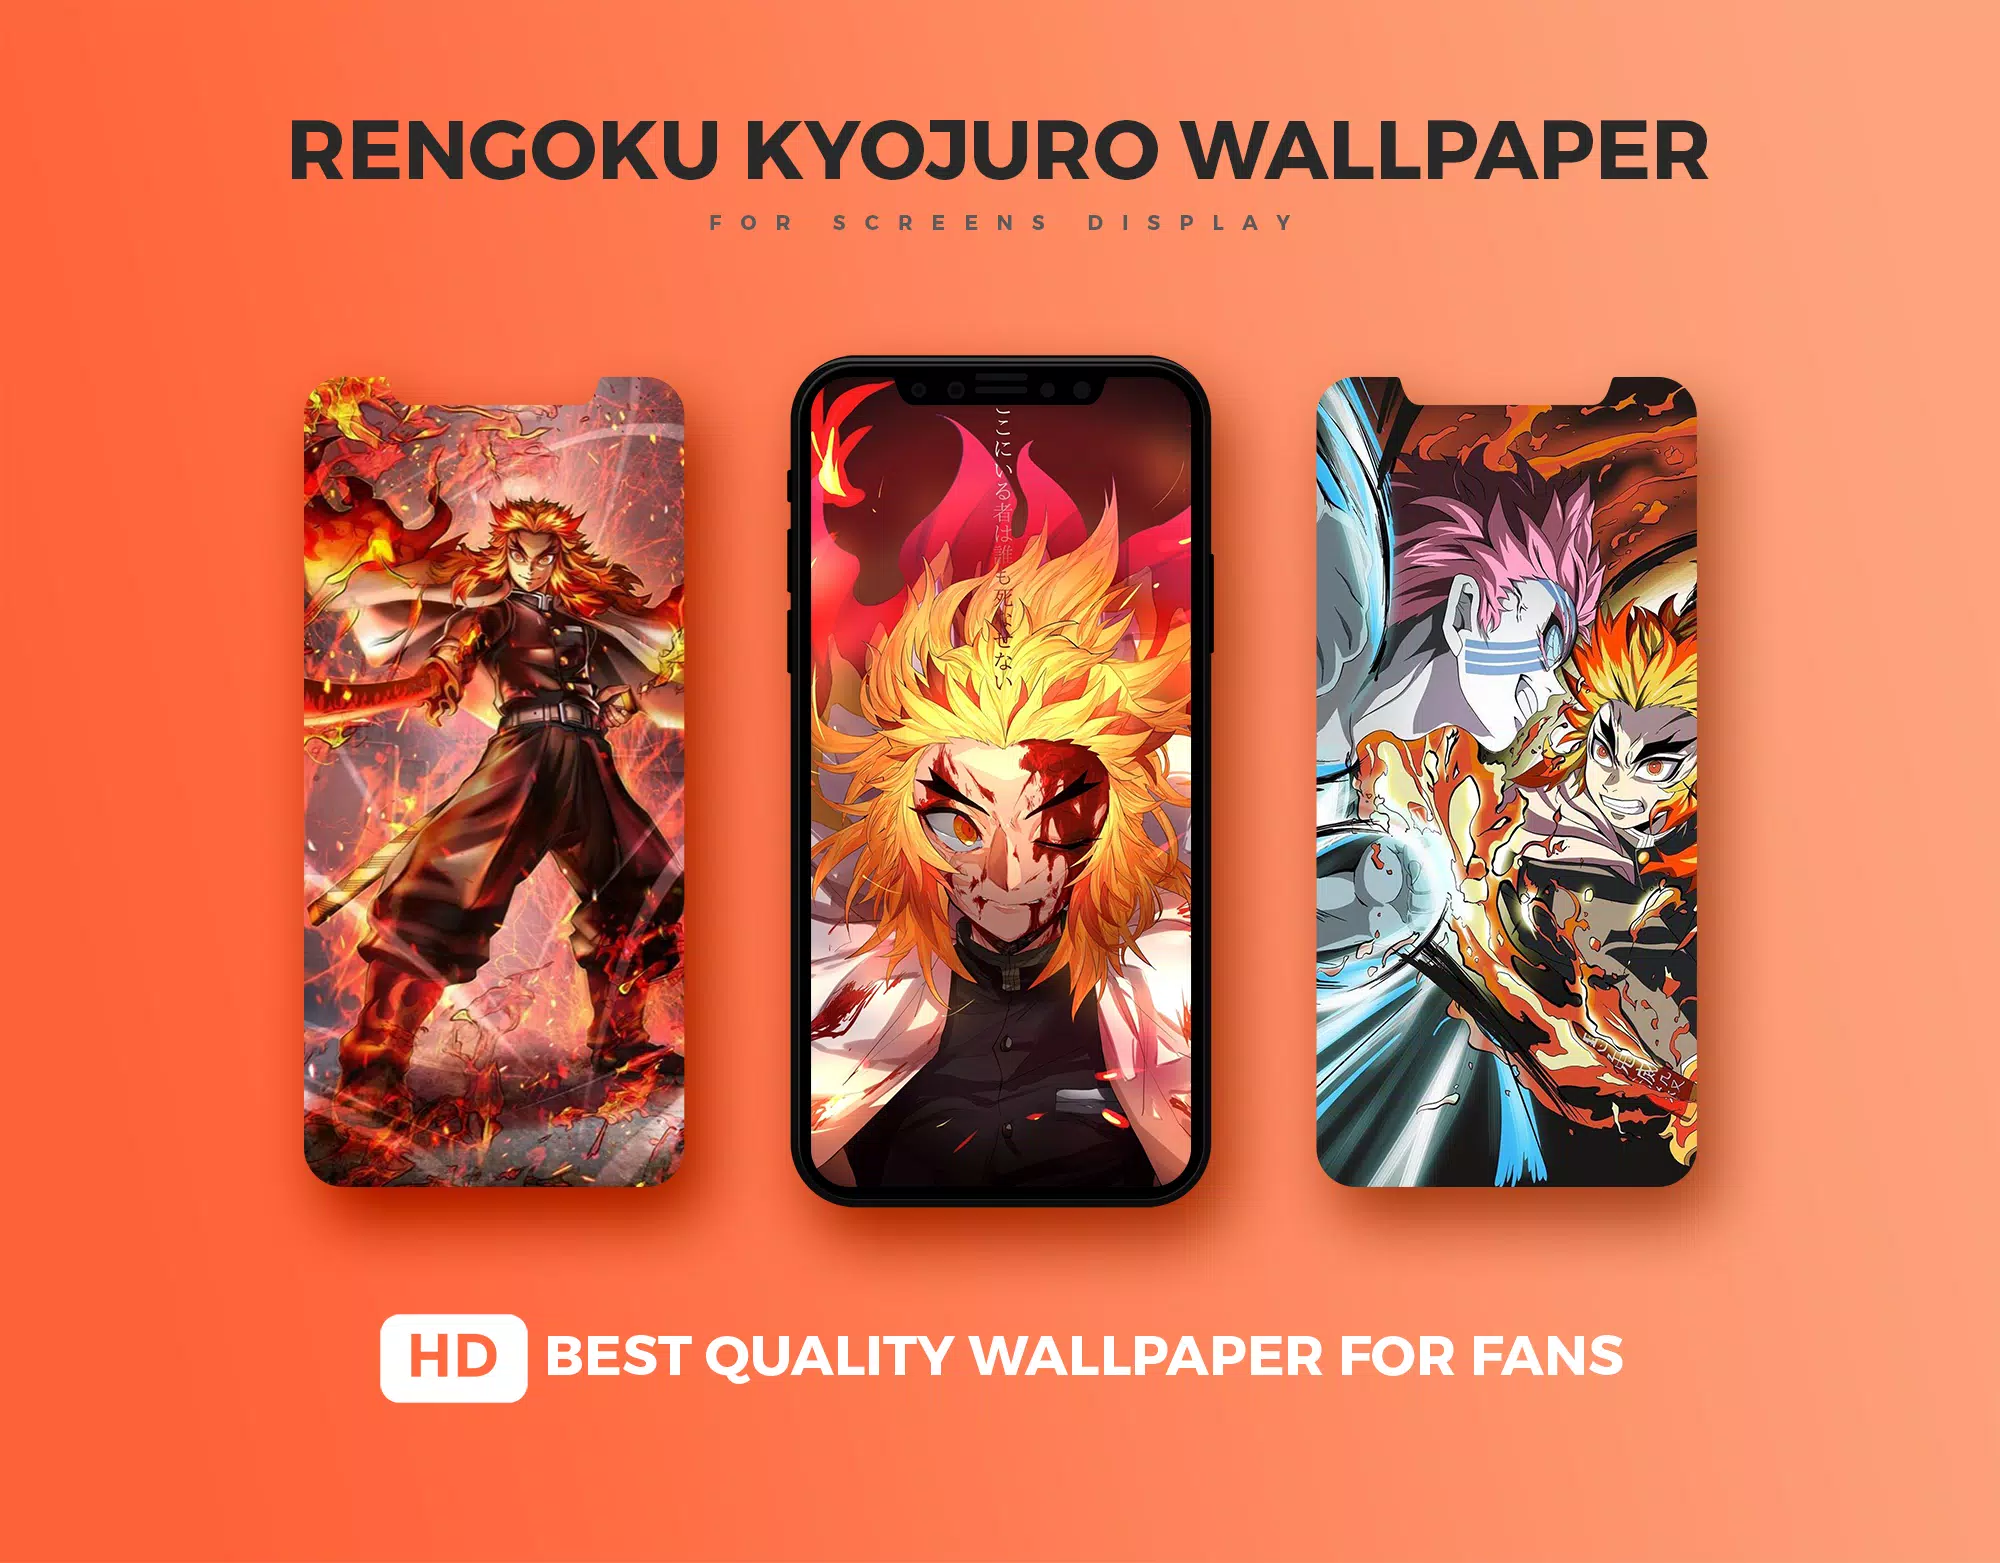 Download Kyojuro Rengoku Wallpaper Hd Android On Pc